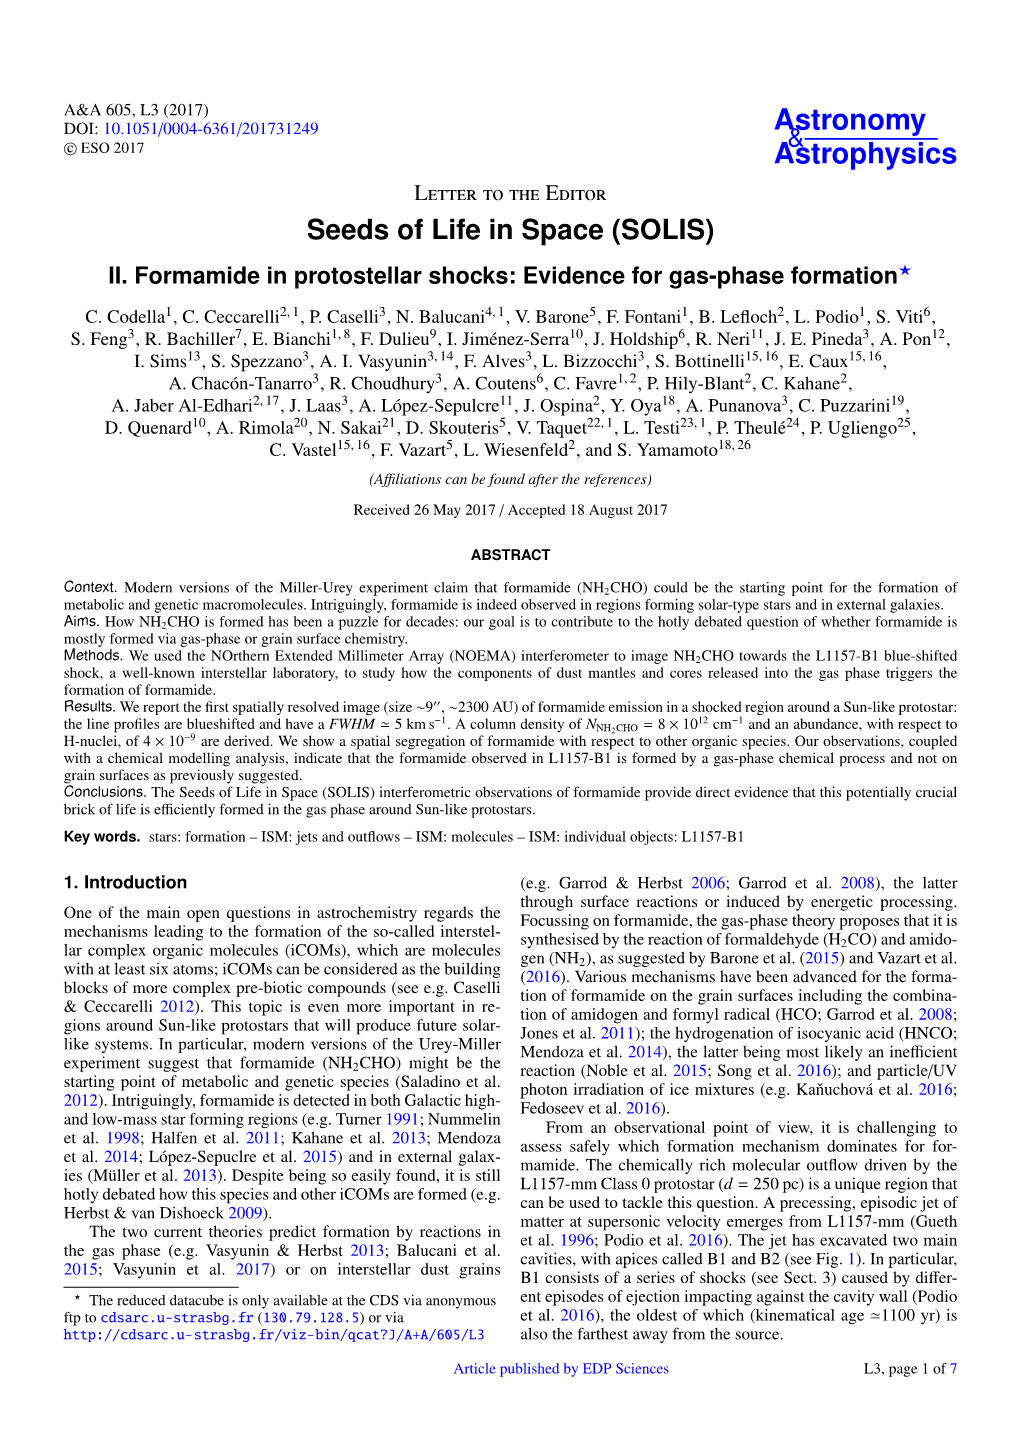 Seeds of Life in Space (SOLIS) II